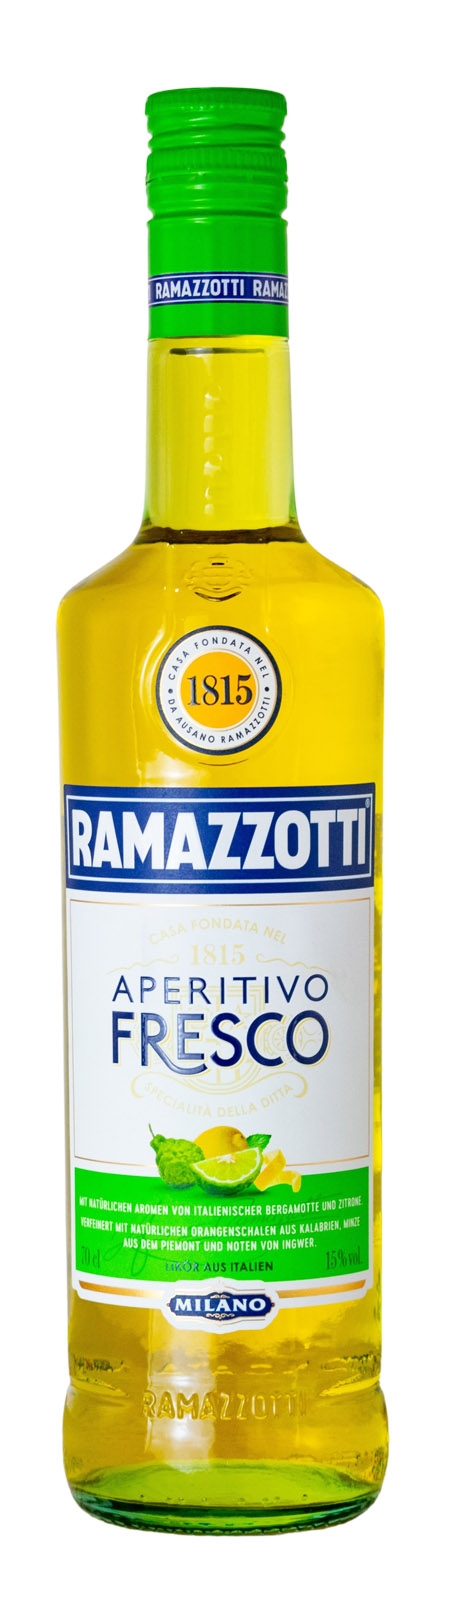 Ramazzotti Aperitivo Fresco günstig kaufen